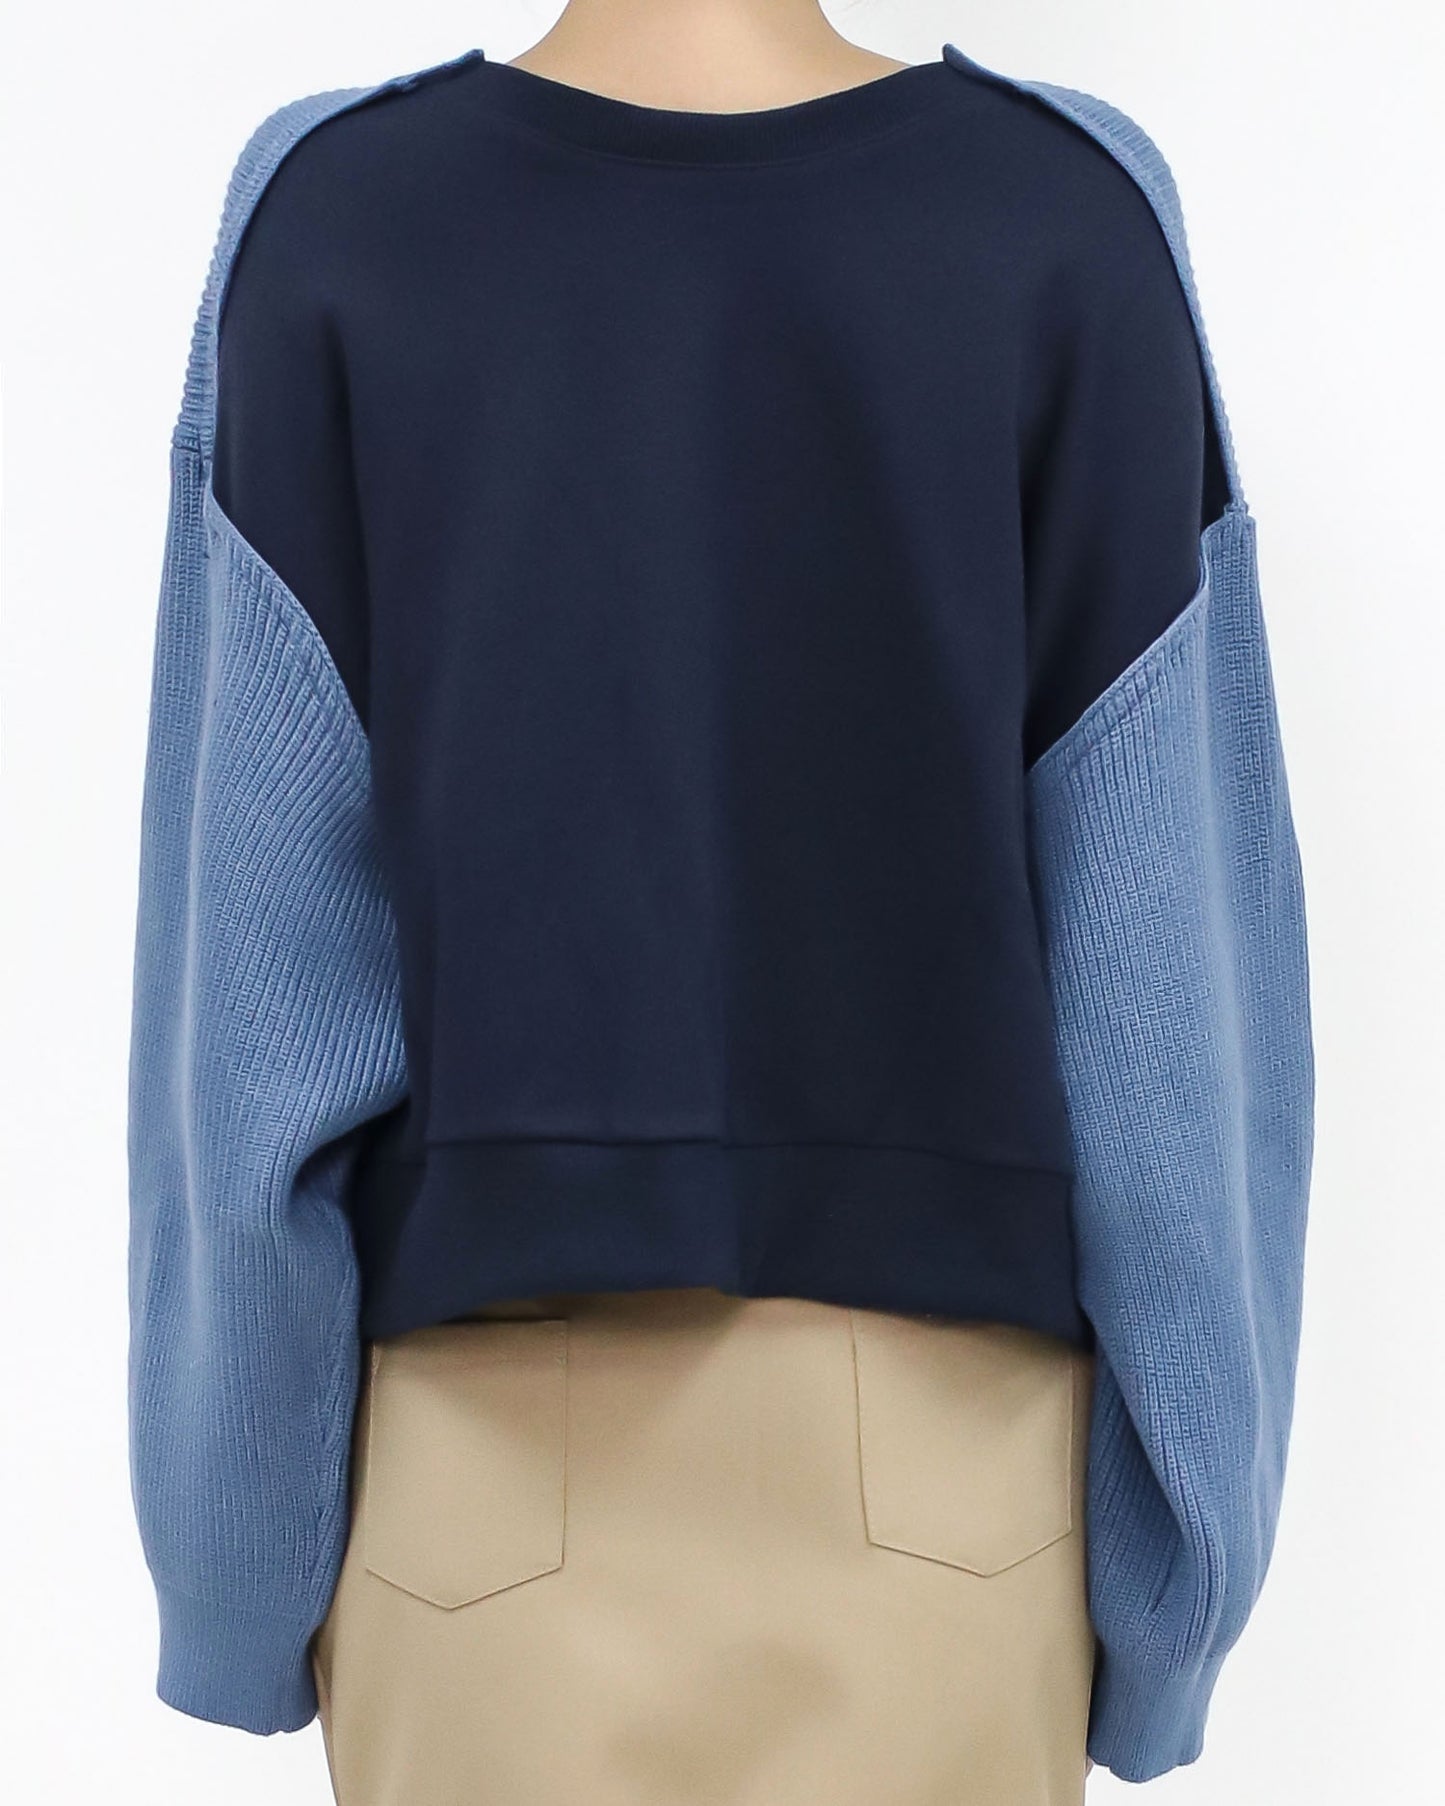 blue knitted & navy swaetshirt